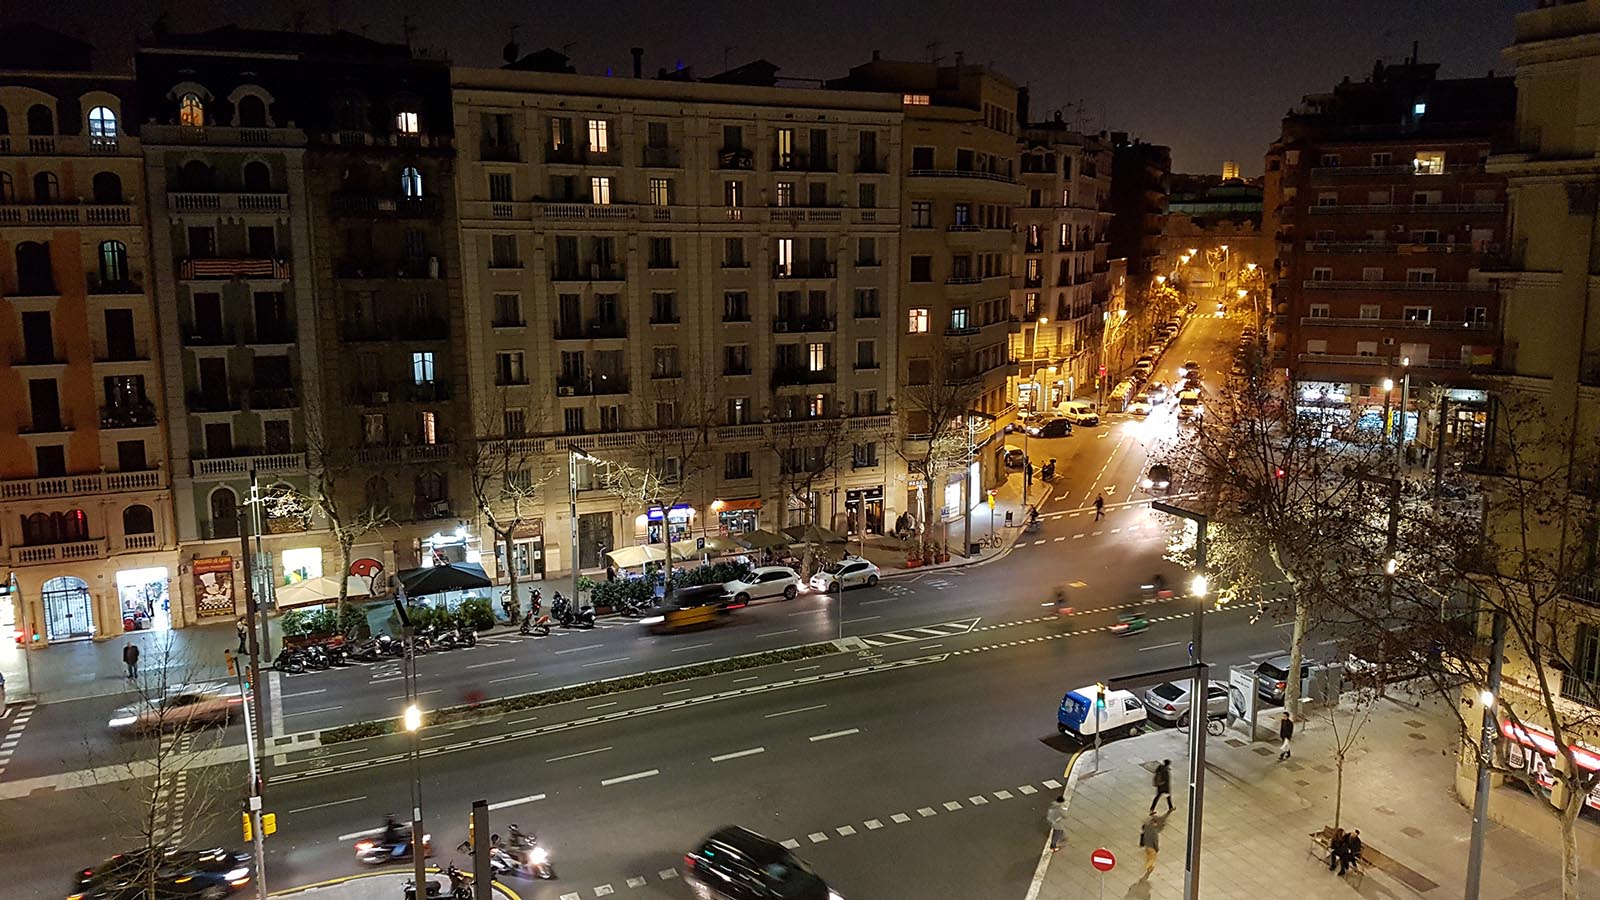 Samsung Galaxy S7 edge - Fototest Barcelona nachts